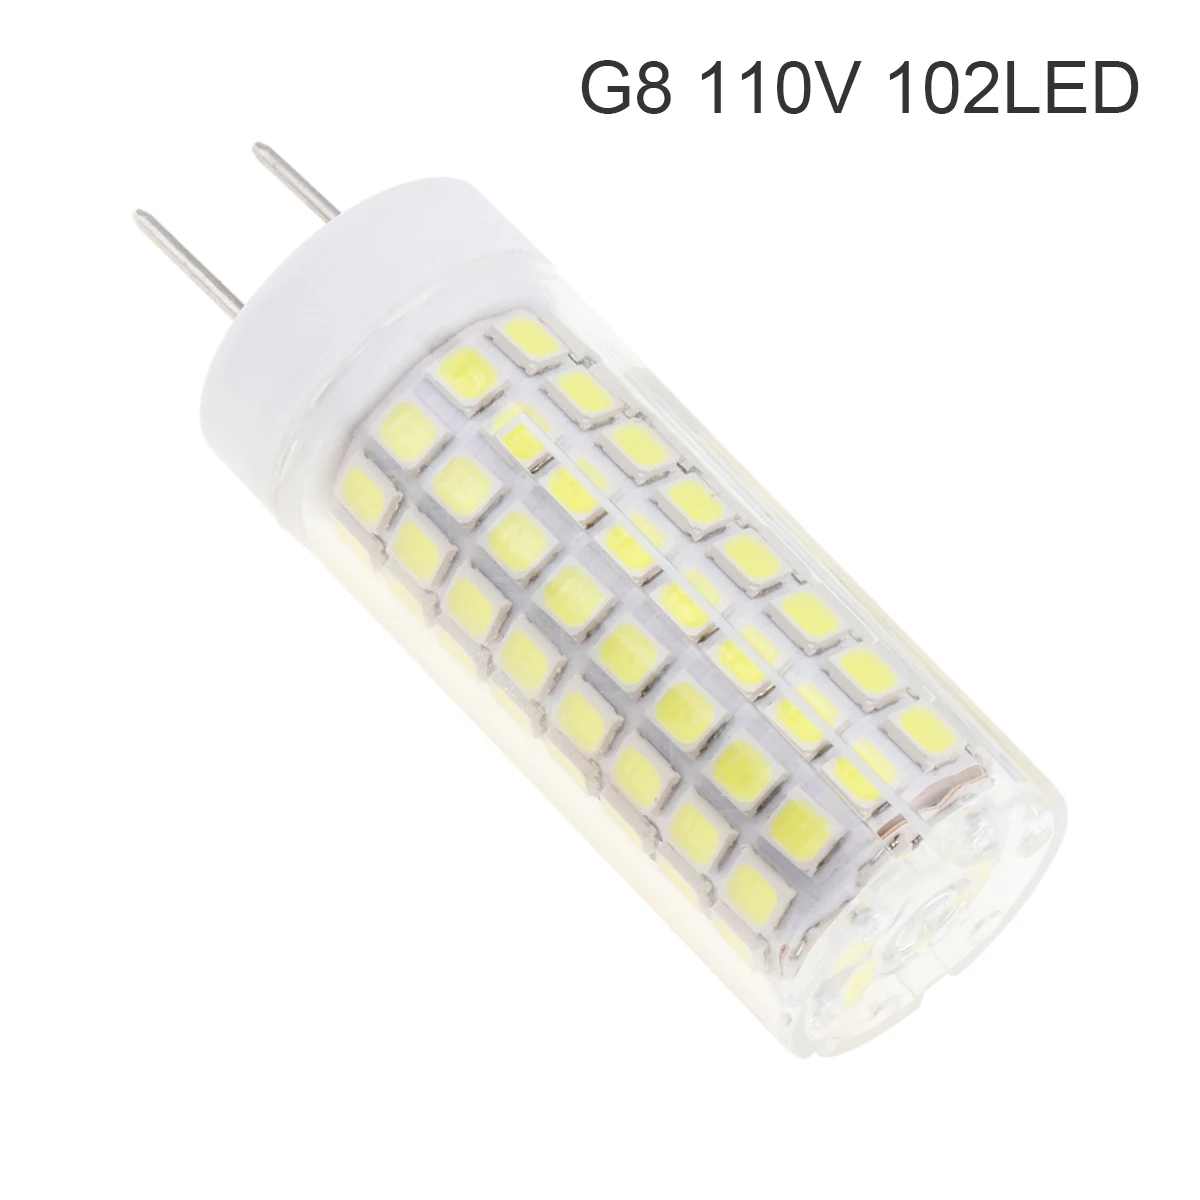 

Dimmable G8 LED Bulb Light 110V White / Warm White 102 LEDs 2835 SMD 10W Corn Bulbs Ceramic Lamp Lighting Accessories